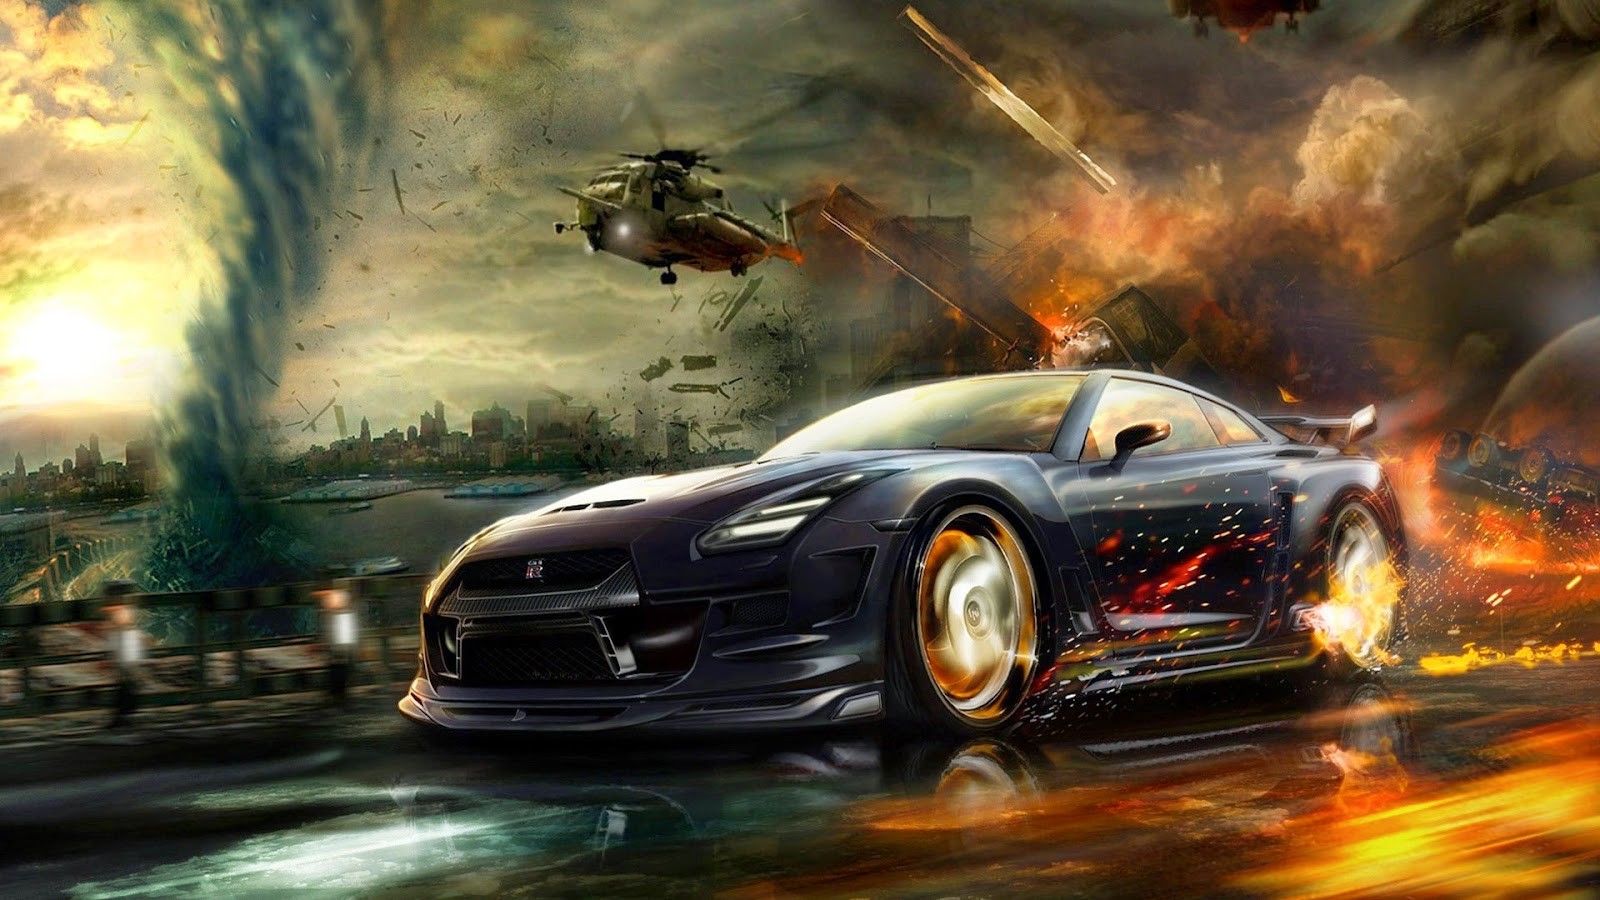 General 1600x900 artwork car battle vehicle helicopters Nissan GT-R photoshopped fire Nissan backfire digital art